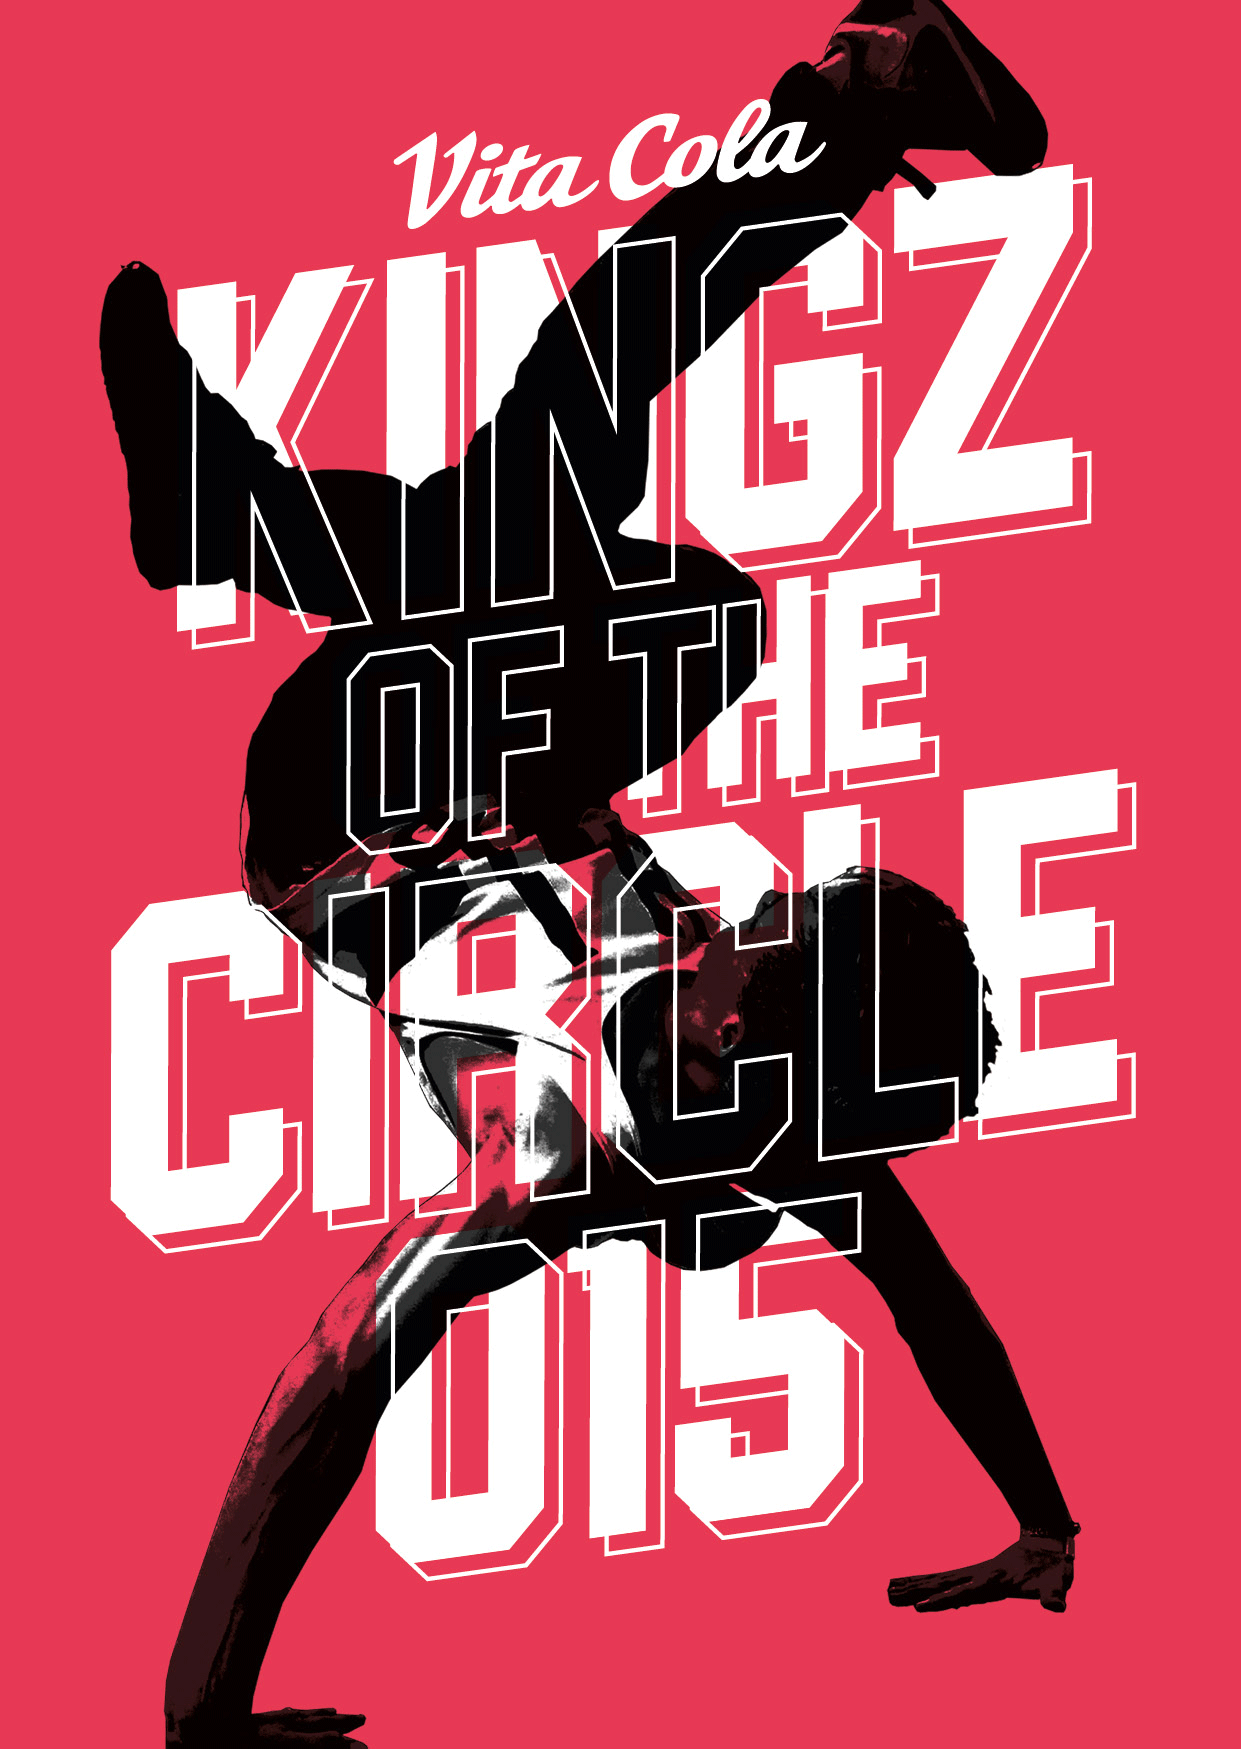 Vita Cola Kingz Of The Circle 2015